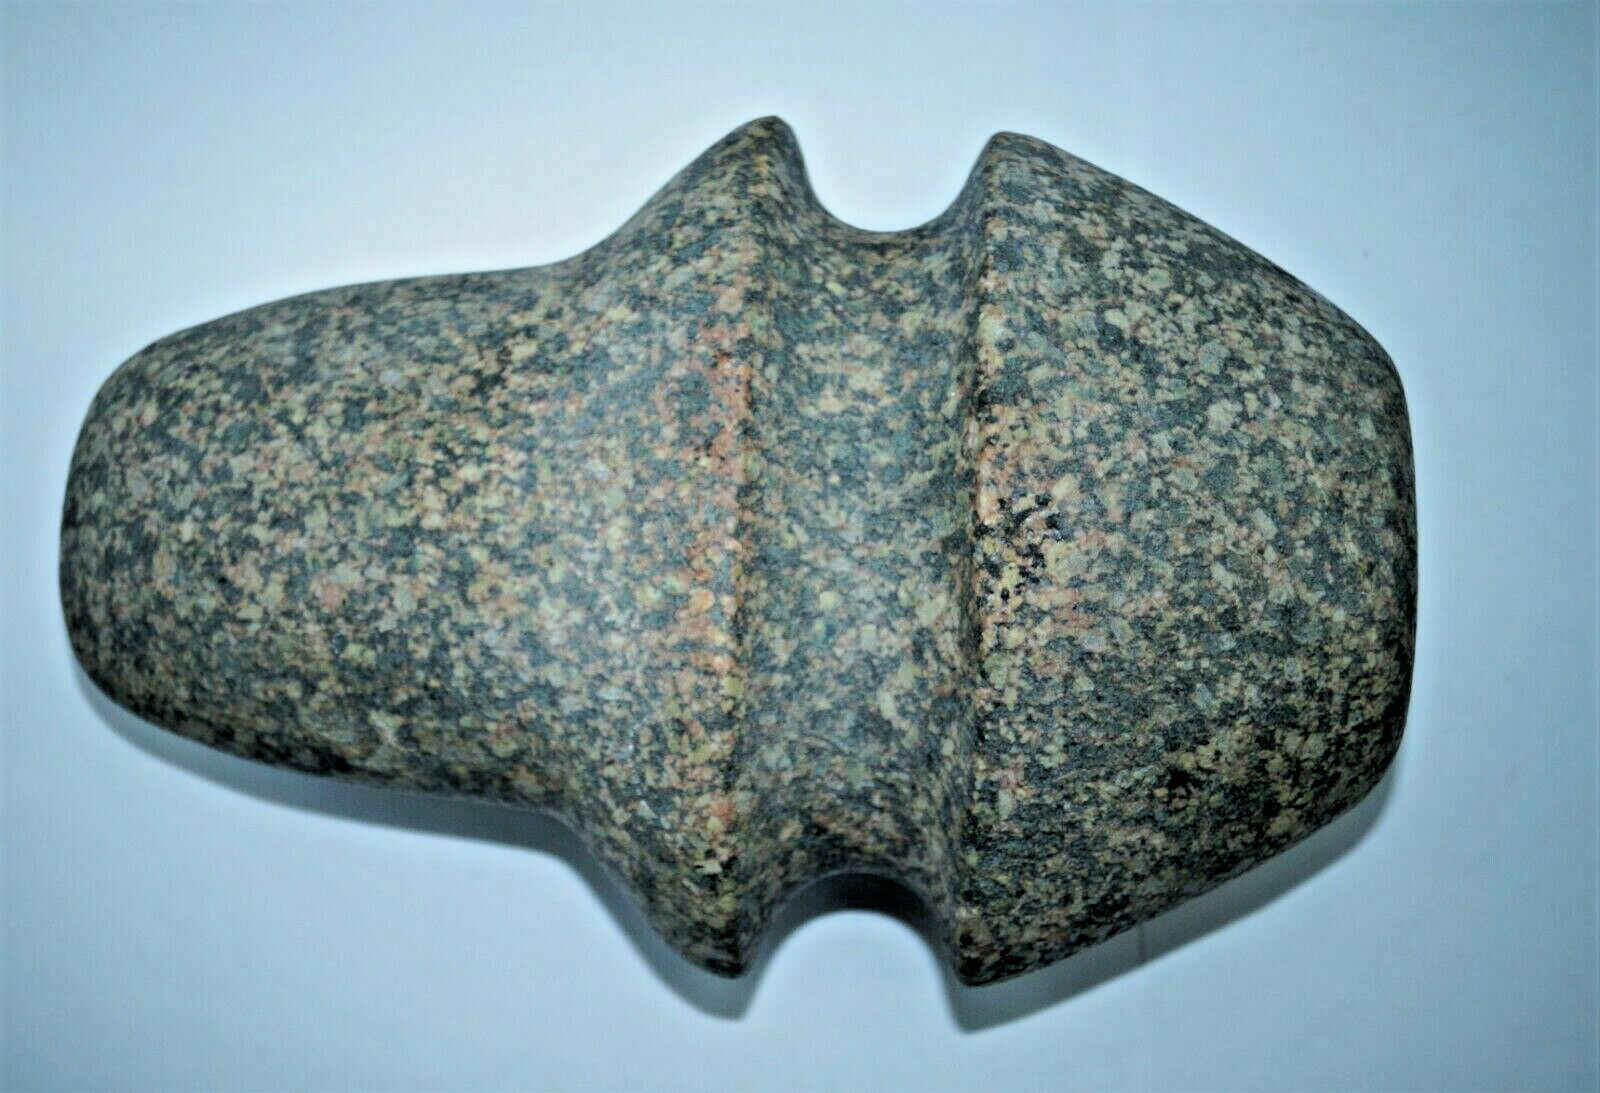 9" Full Groove Pnkblk Granite Stone Axe Head Woodland Period Ohio Valley Indiana